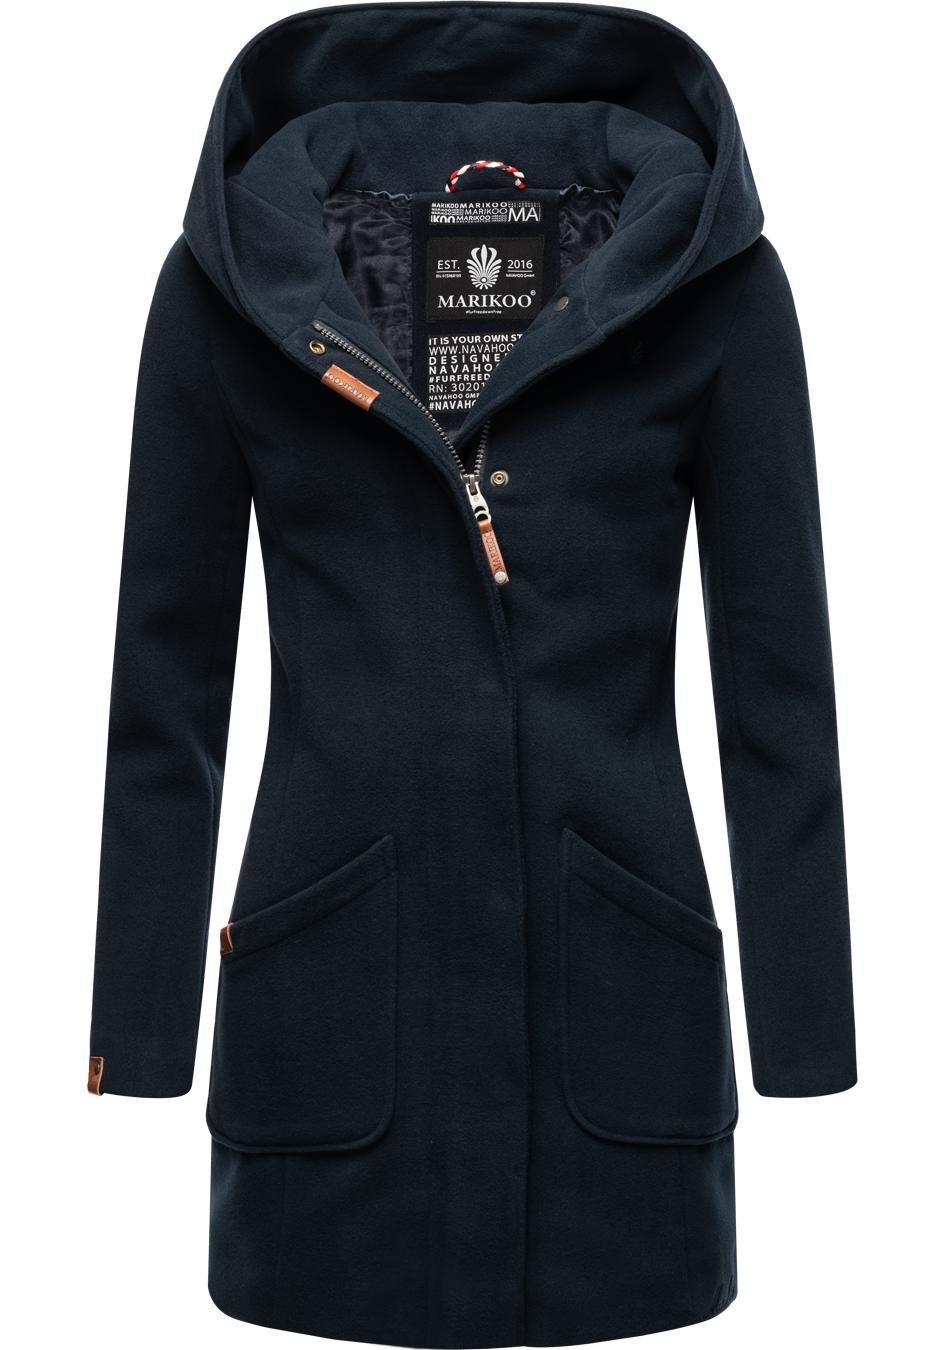 Marikoo Wintermantel Maikoo hochwertiger Mantel mit großer Kapuze dunkelblau